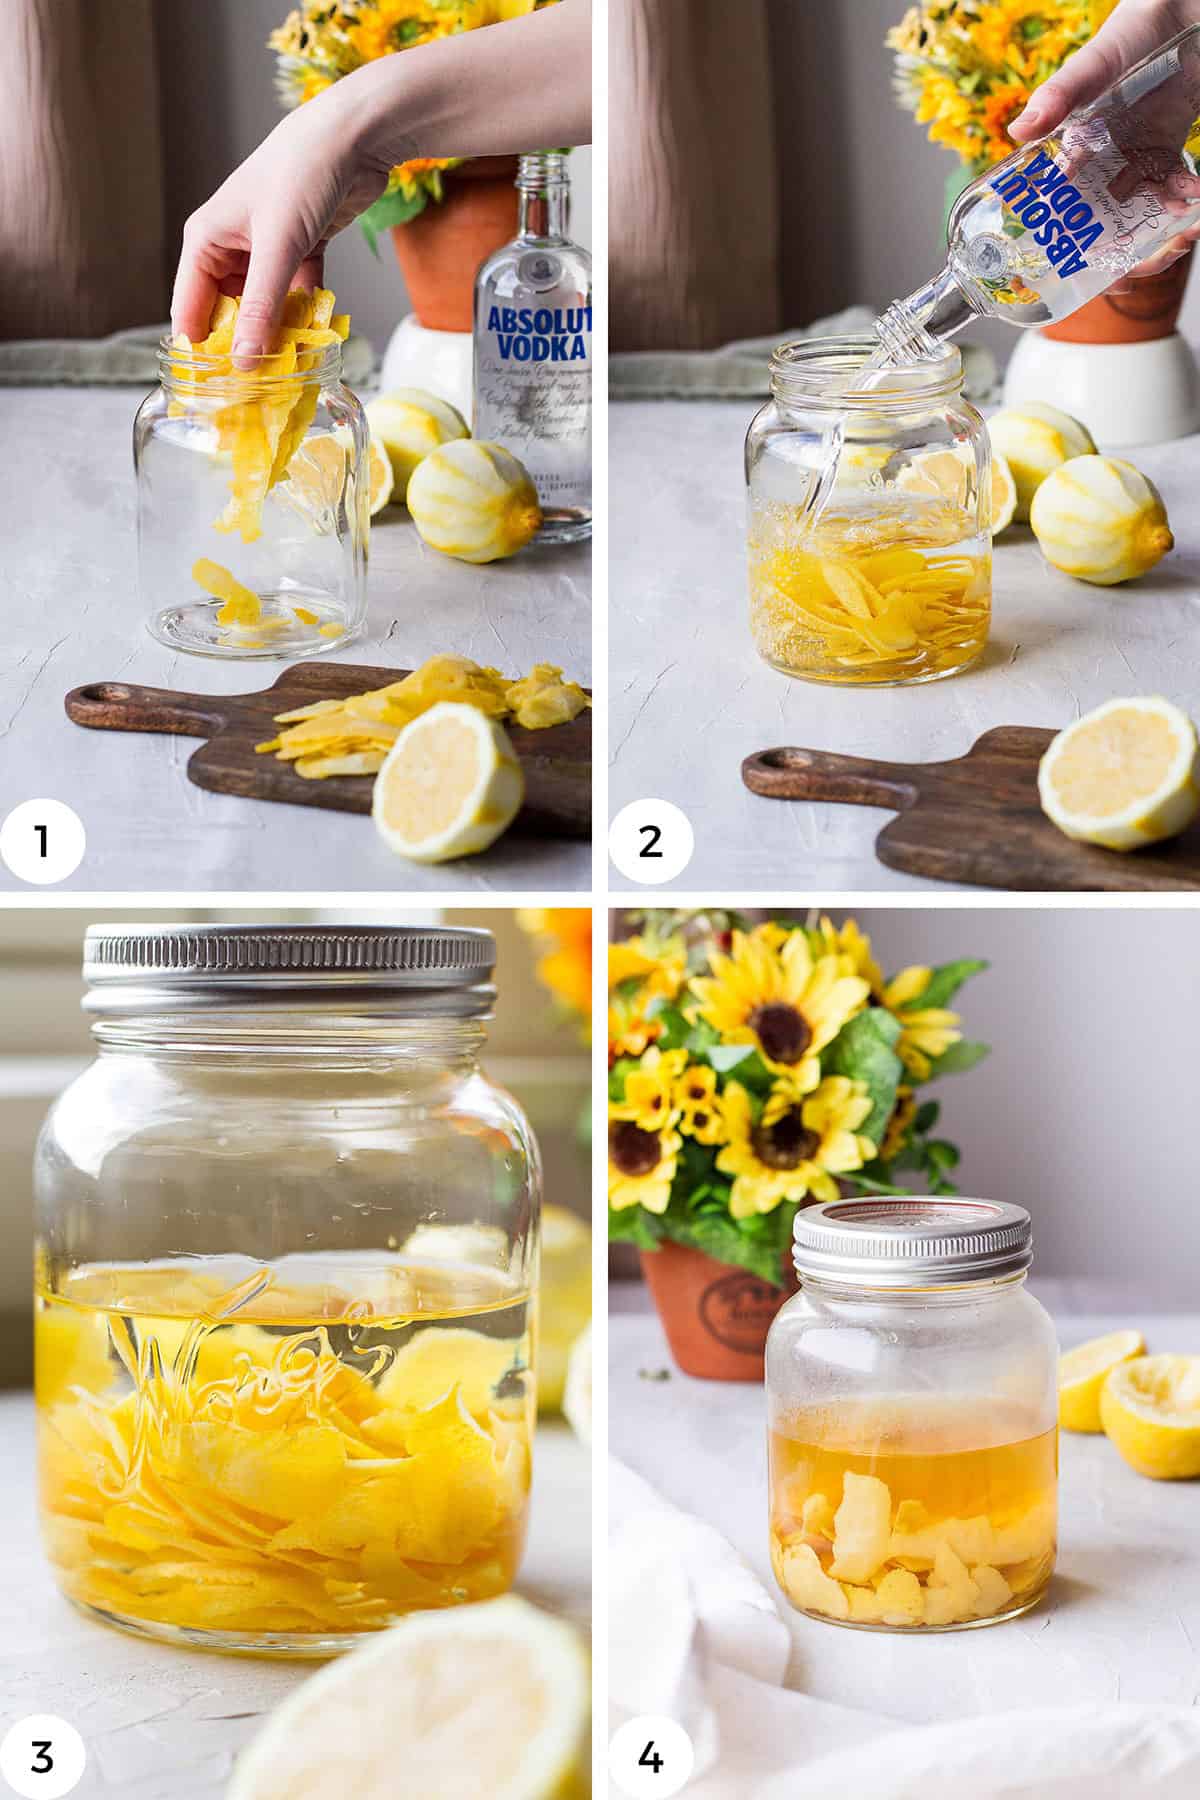 Steps to make lemon vodka.